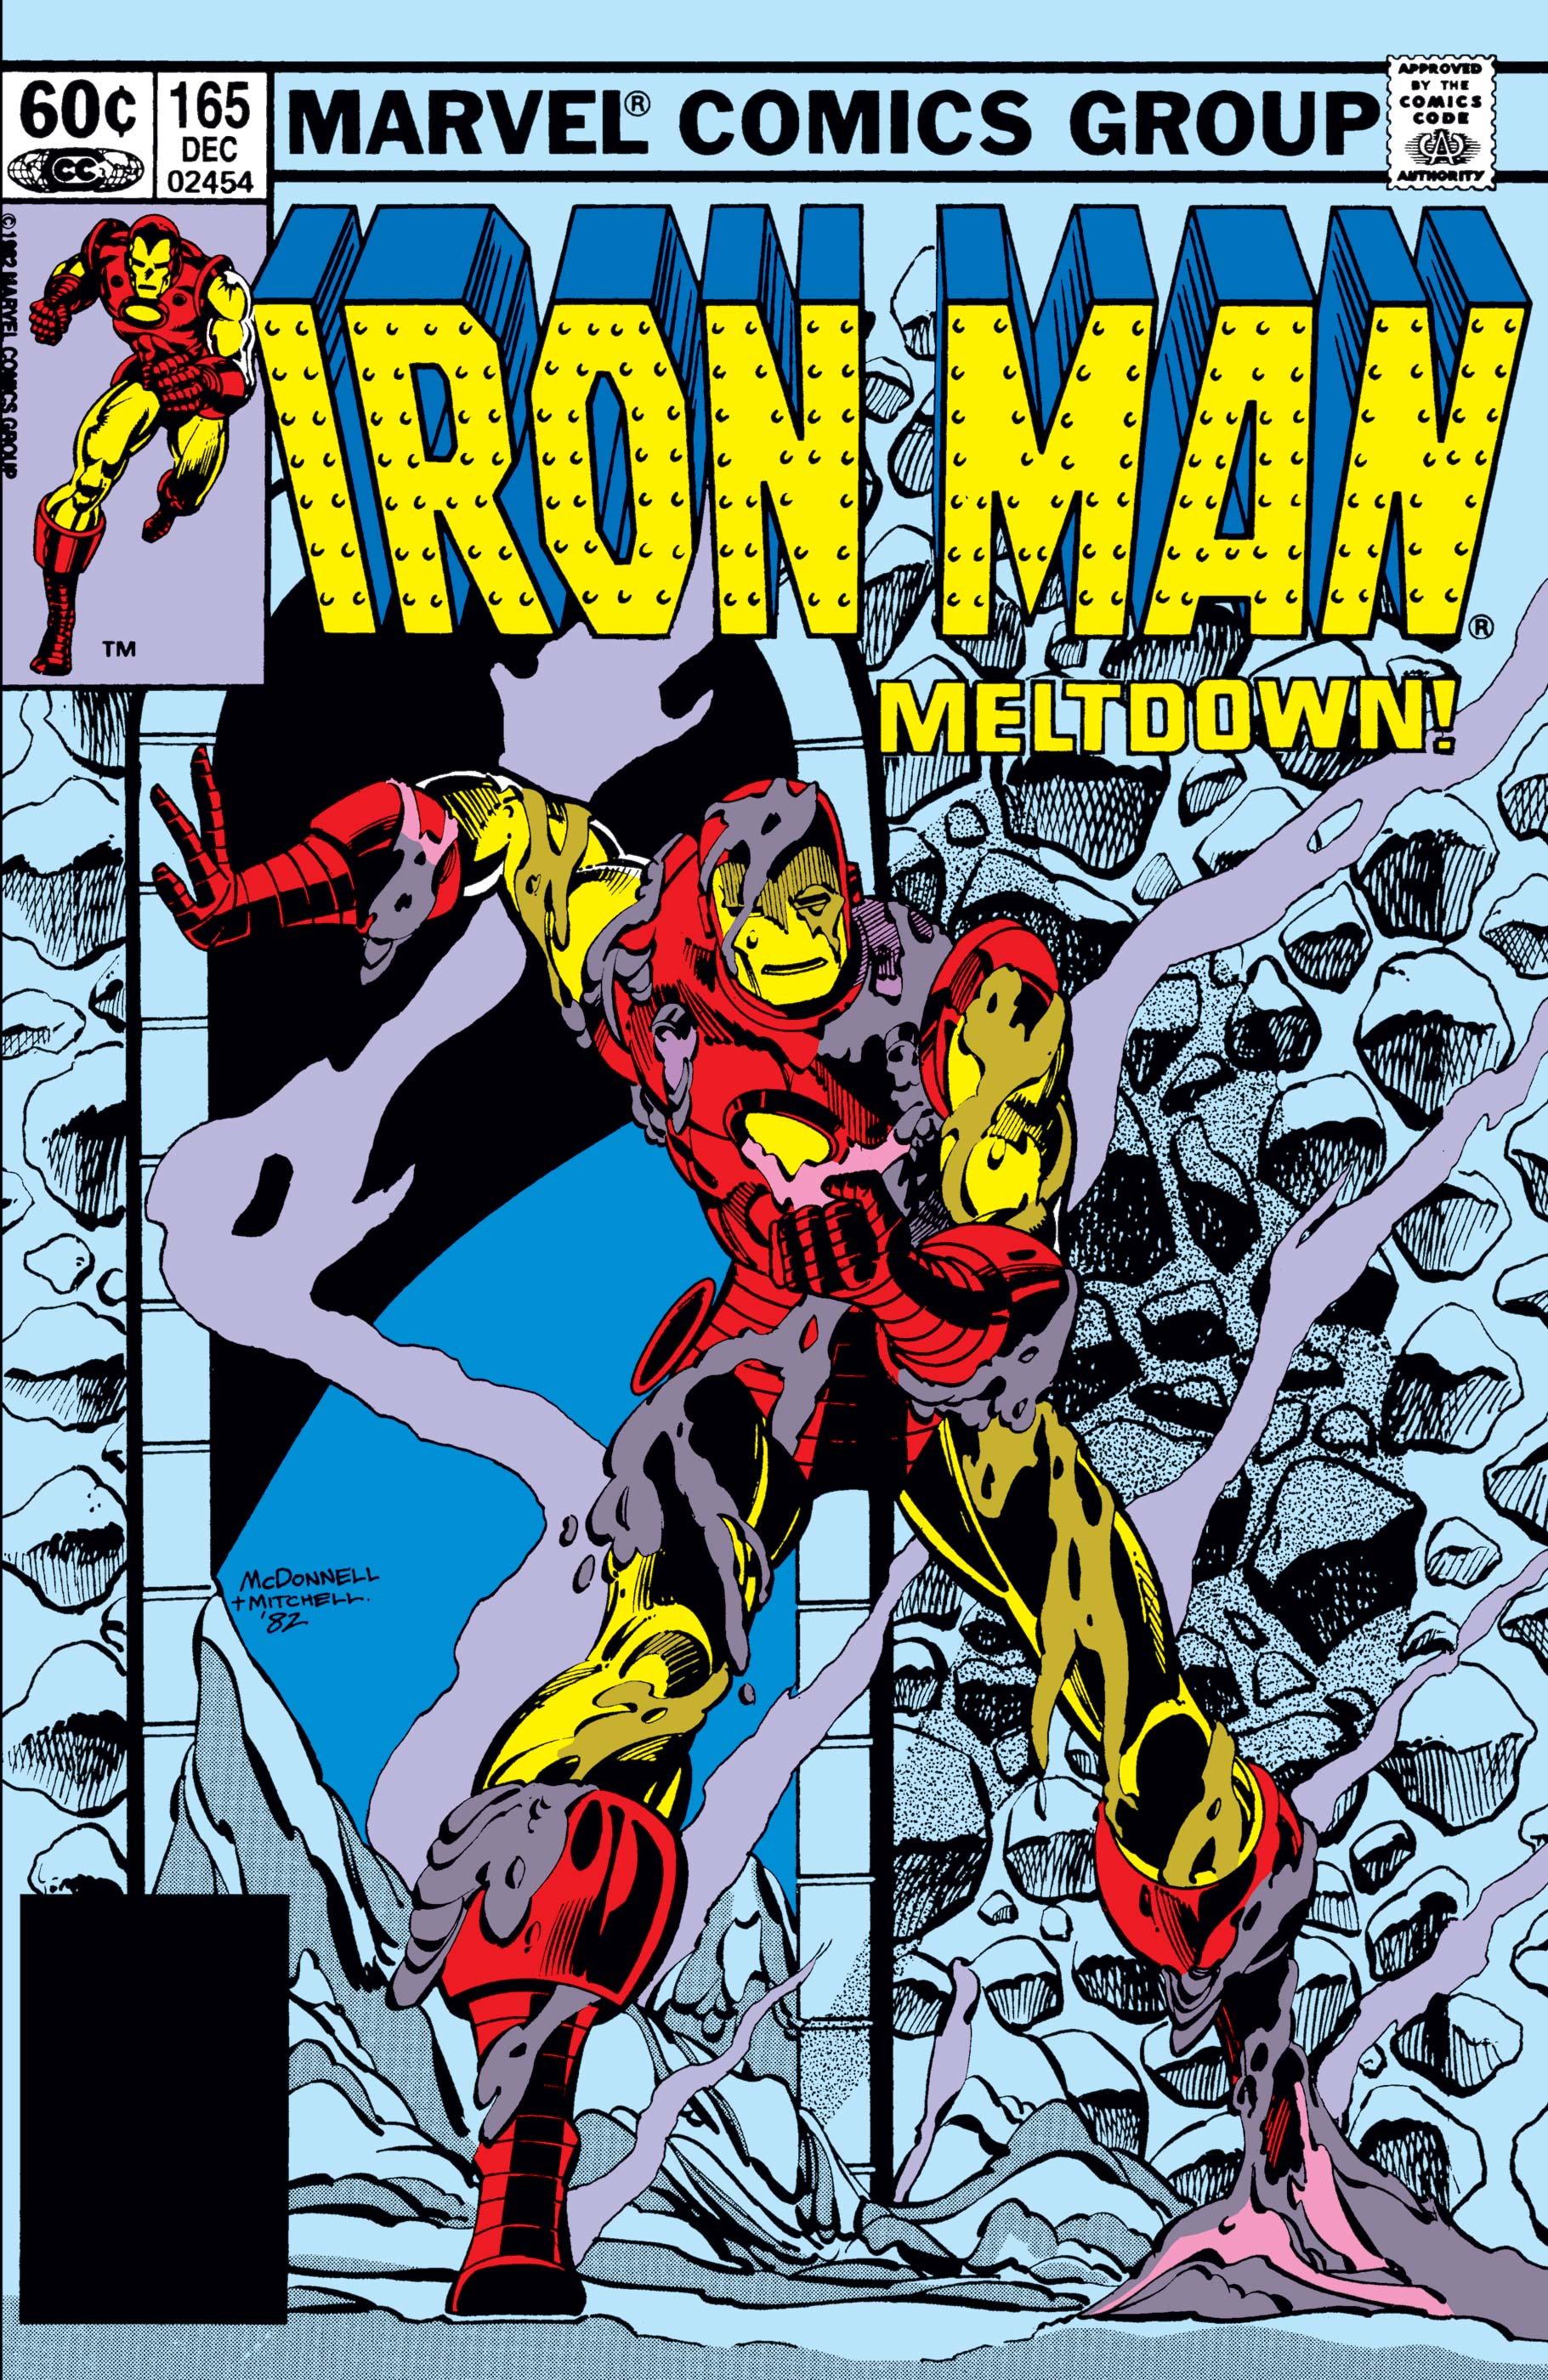 Iron Man (1968) #165